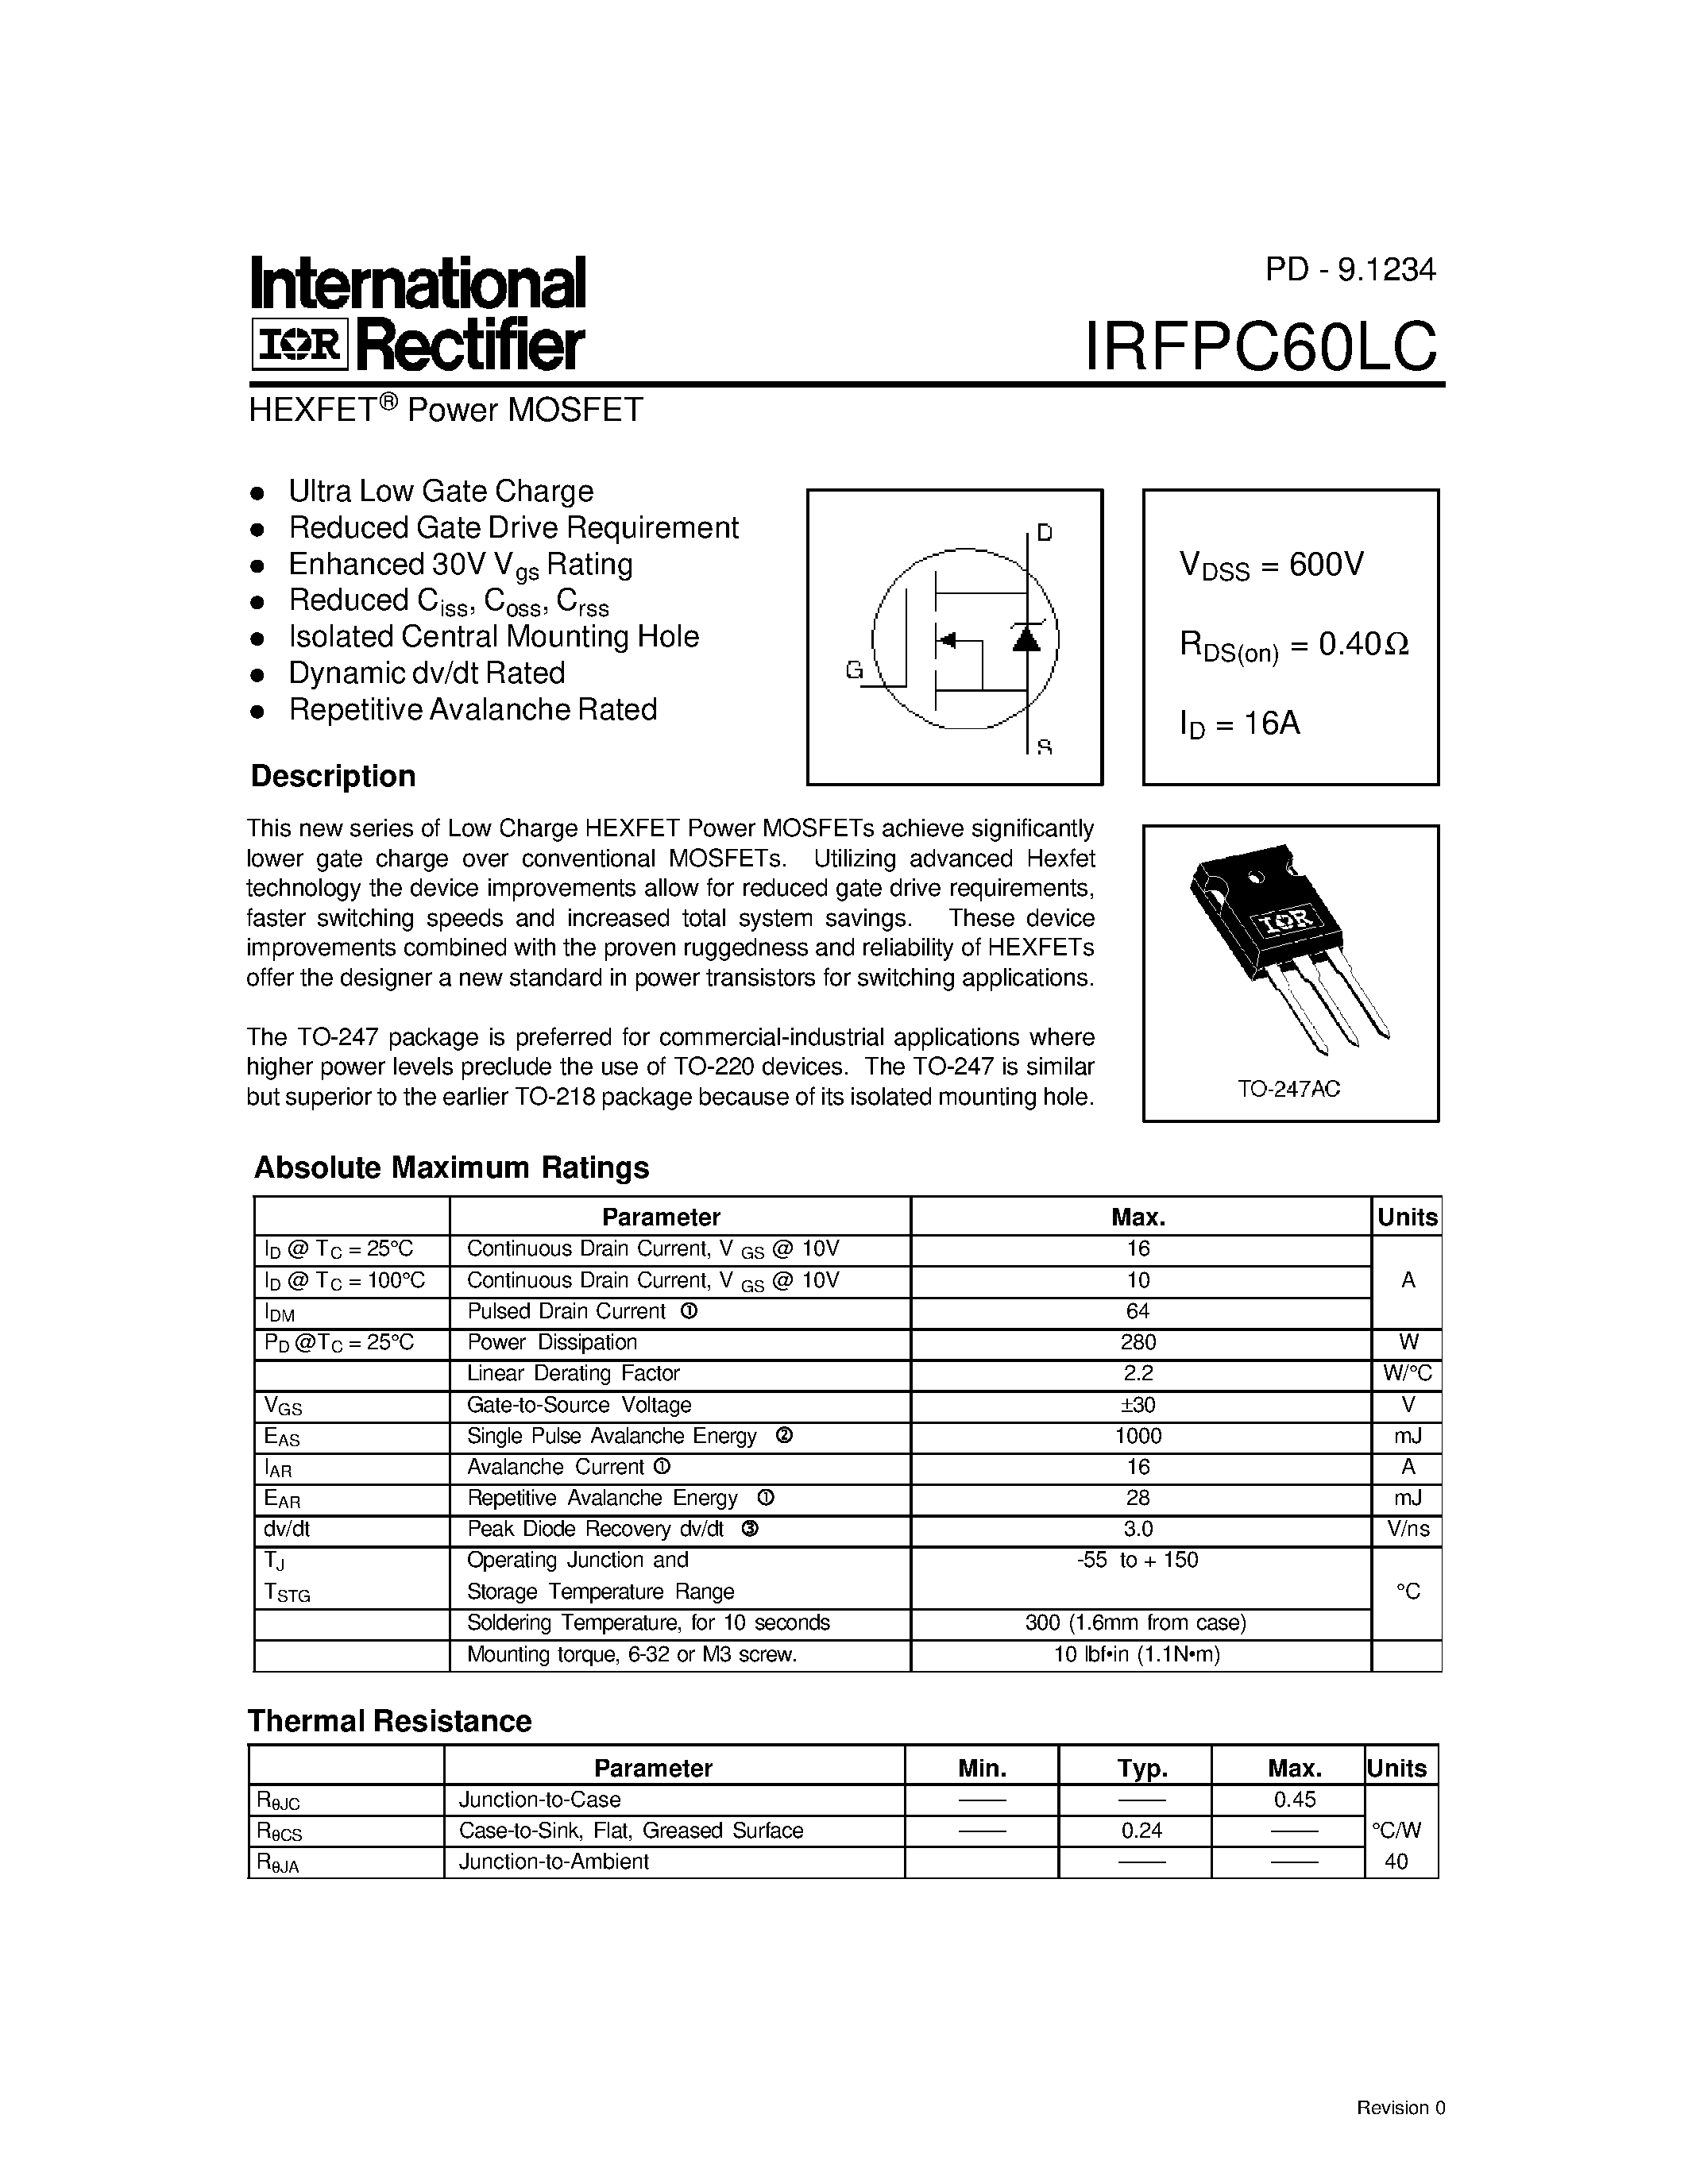 Даташит IRFPC60LC - Power MOSFET страница 1